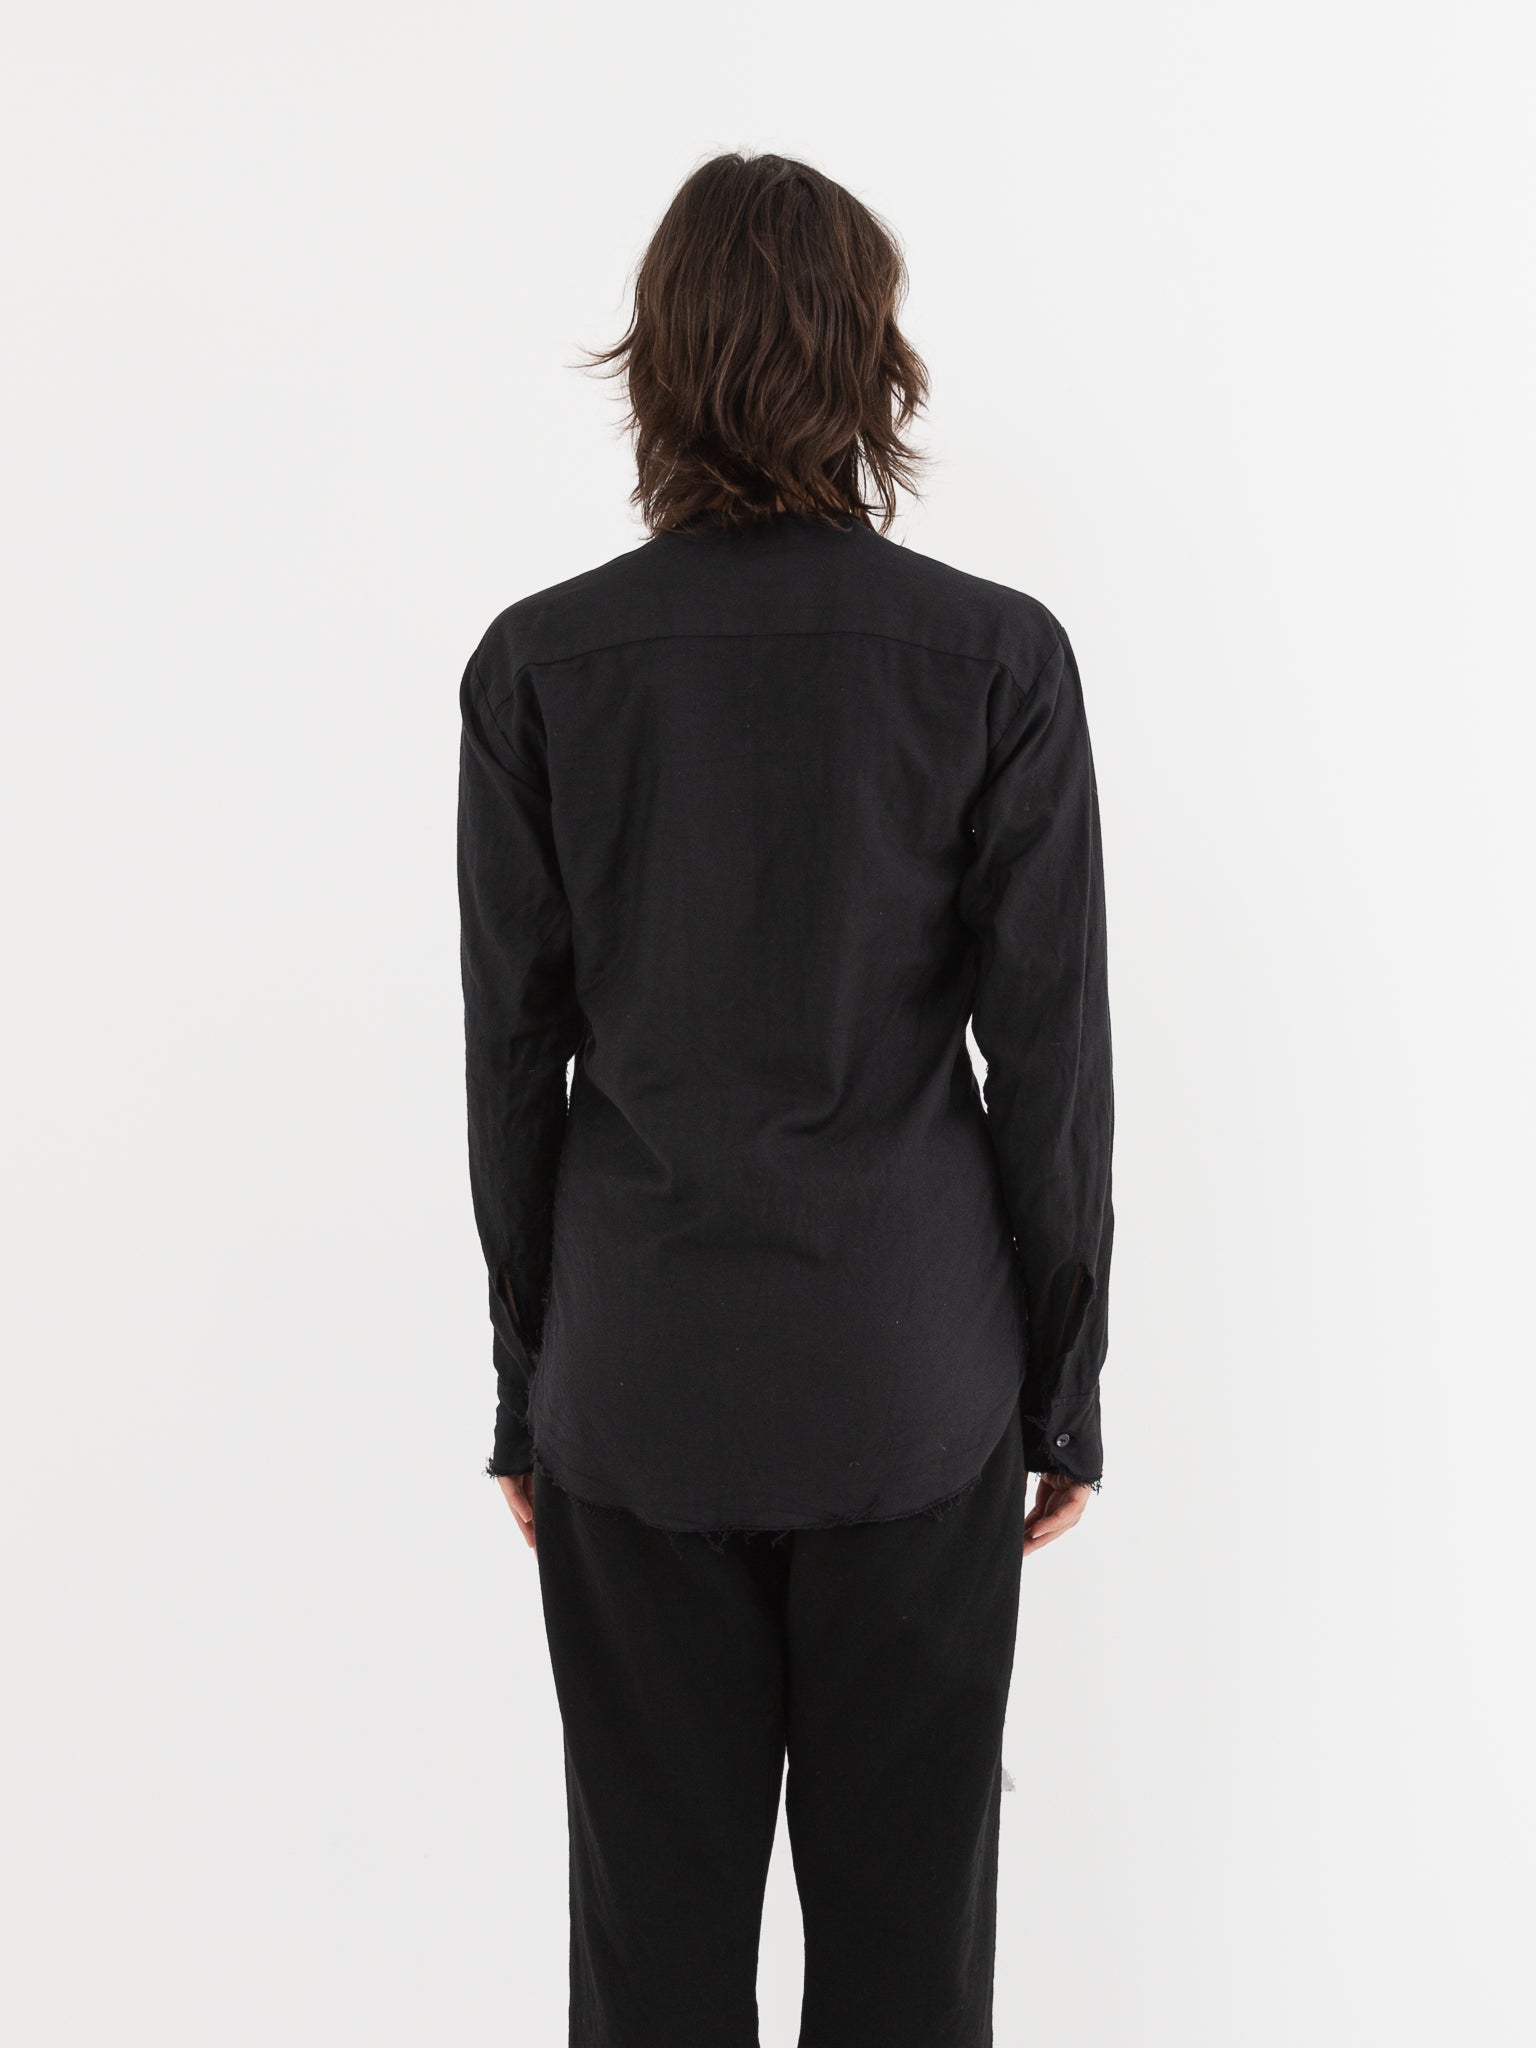 Elena Dawson No Collar Shirt in Black - Worthwhile, Inc.